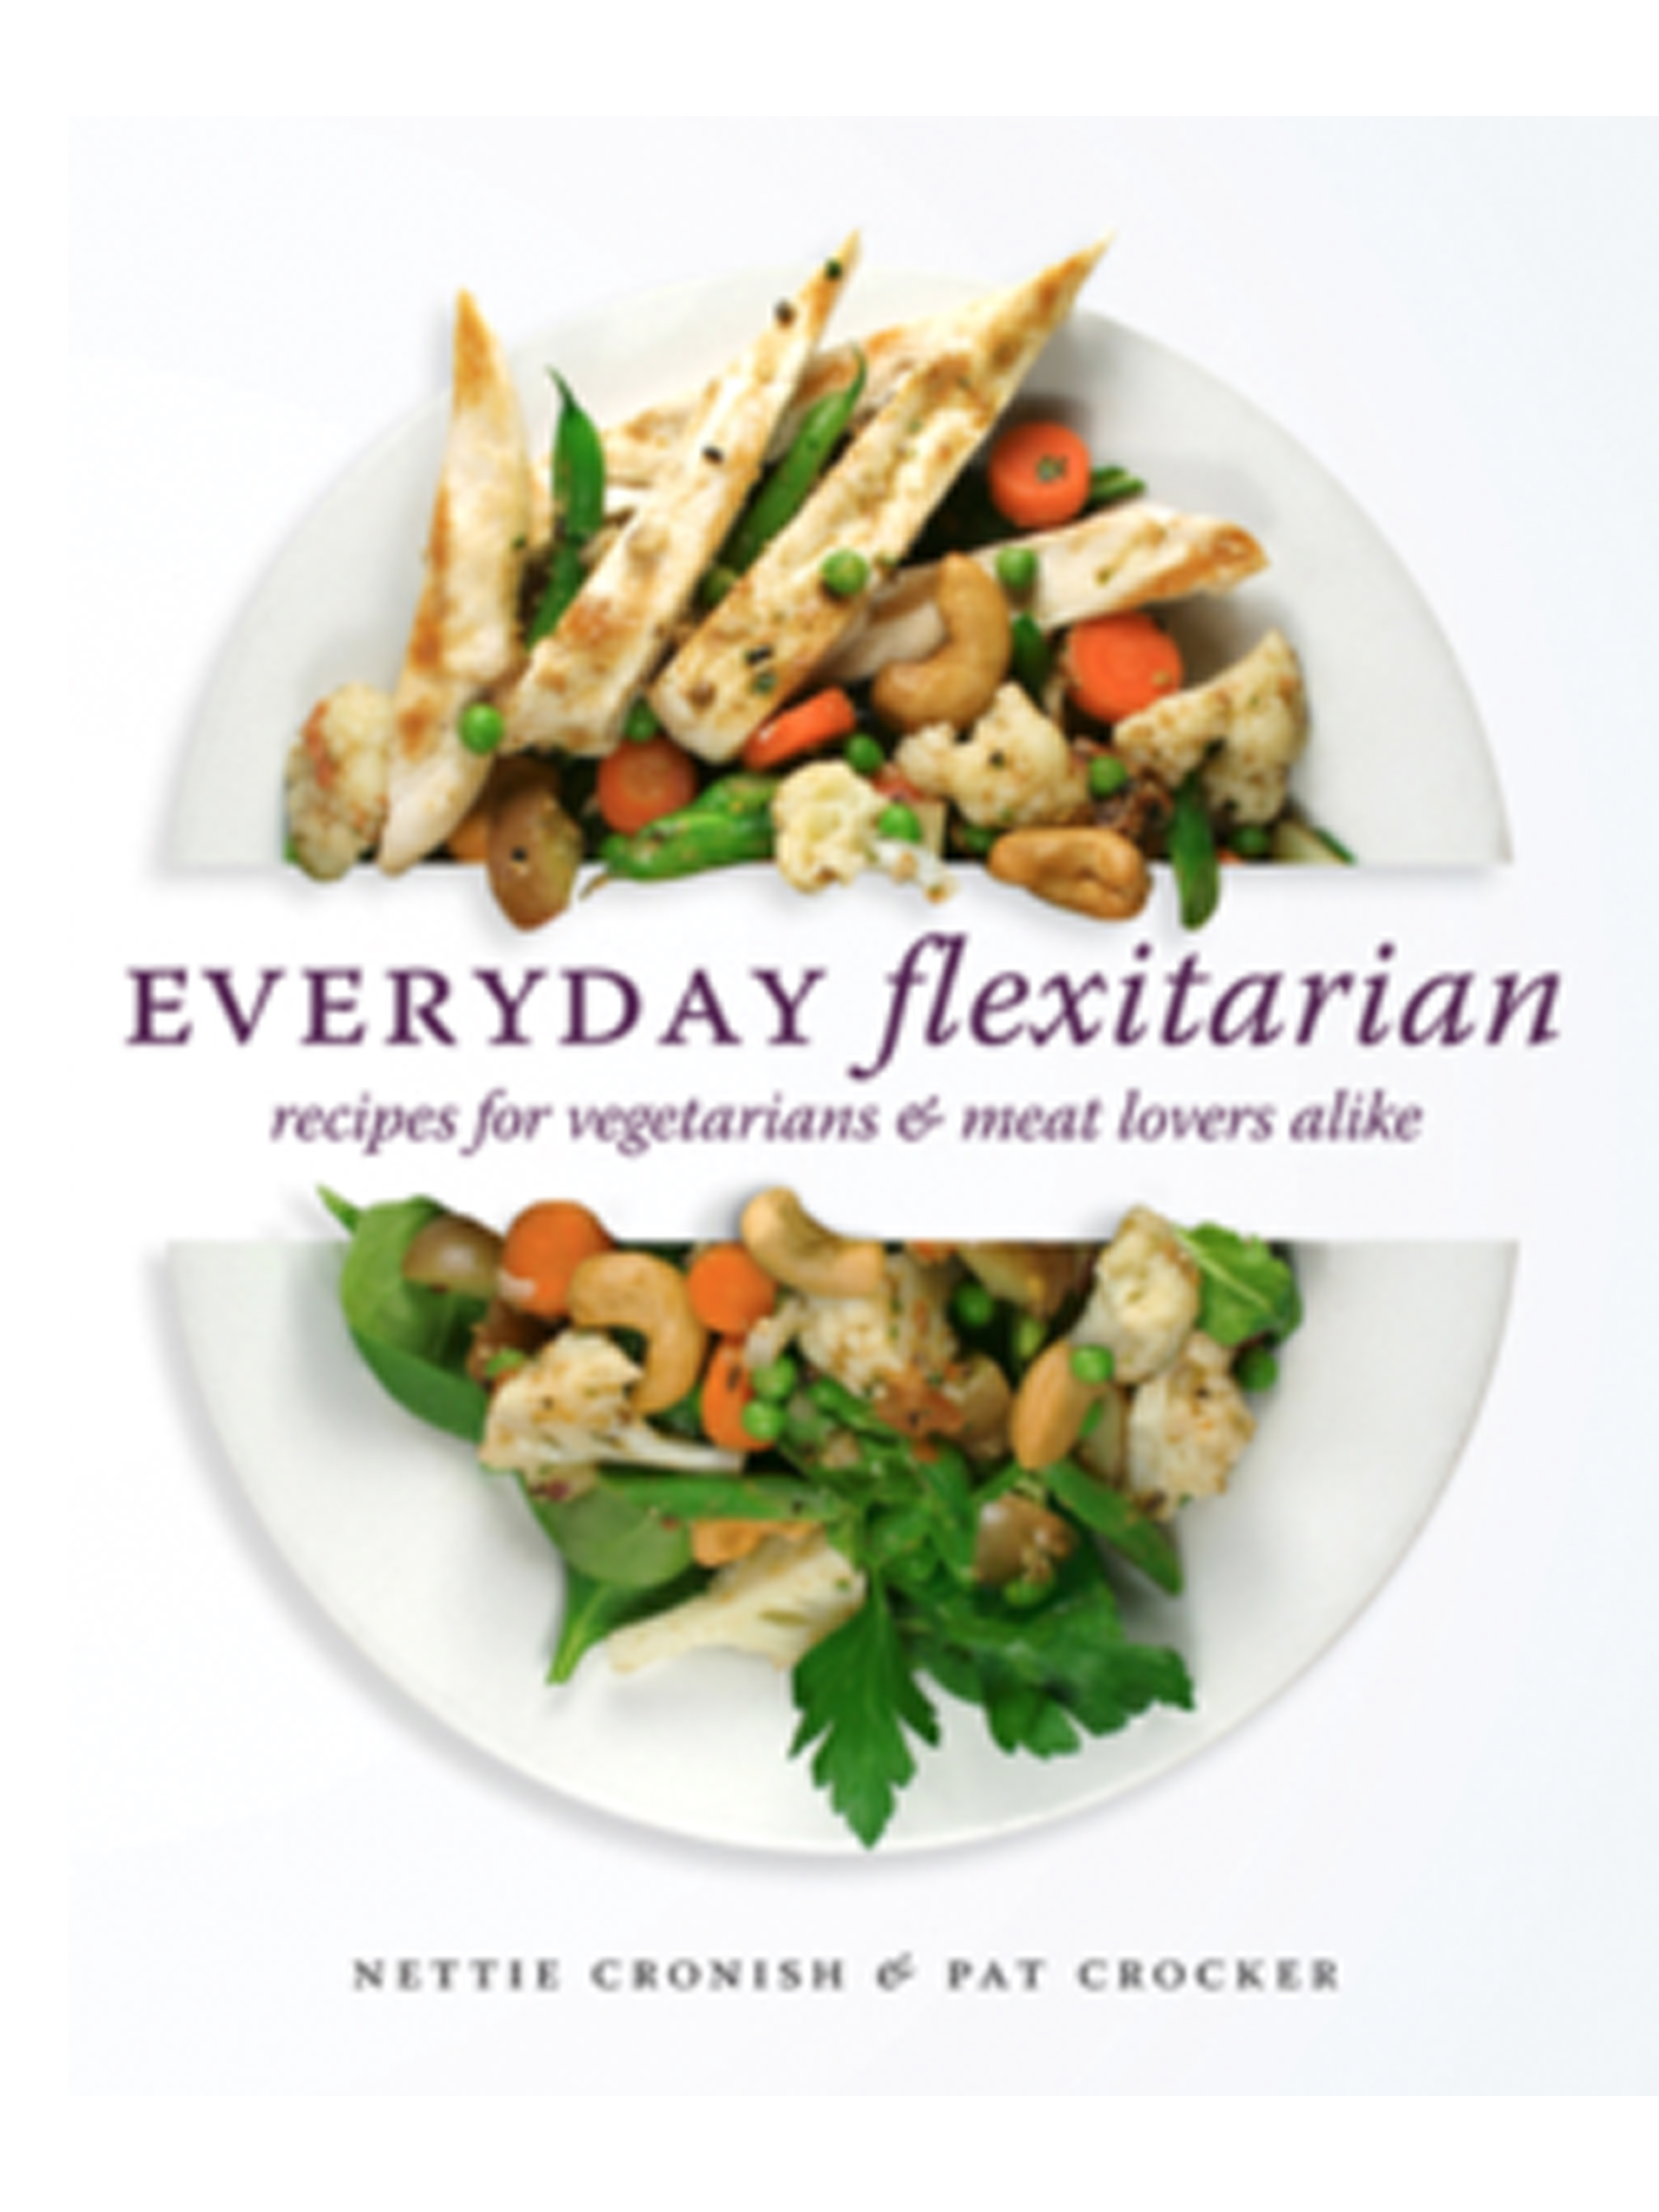 Everyday Flexitarian by Pat Crocker